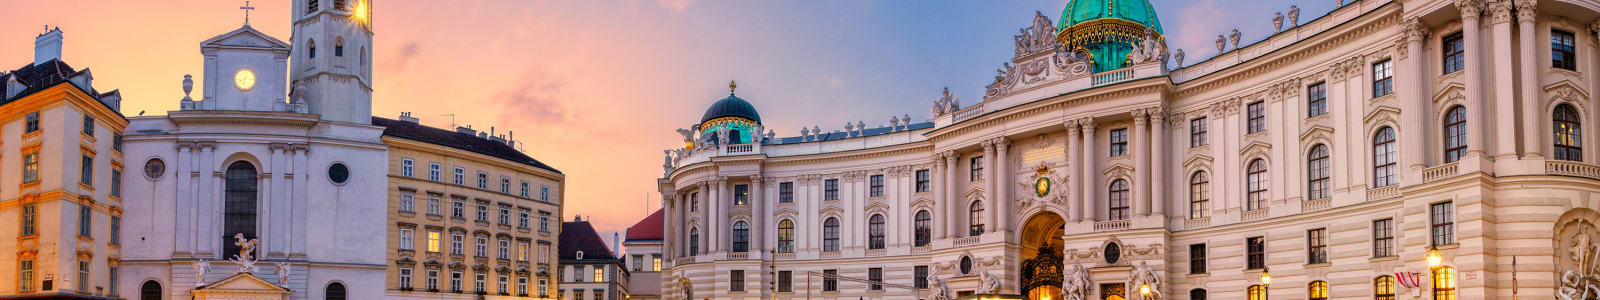 Imperial Hofburg Palace, Vienna